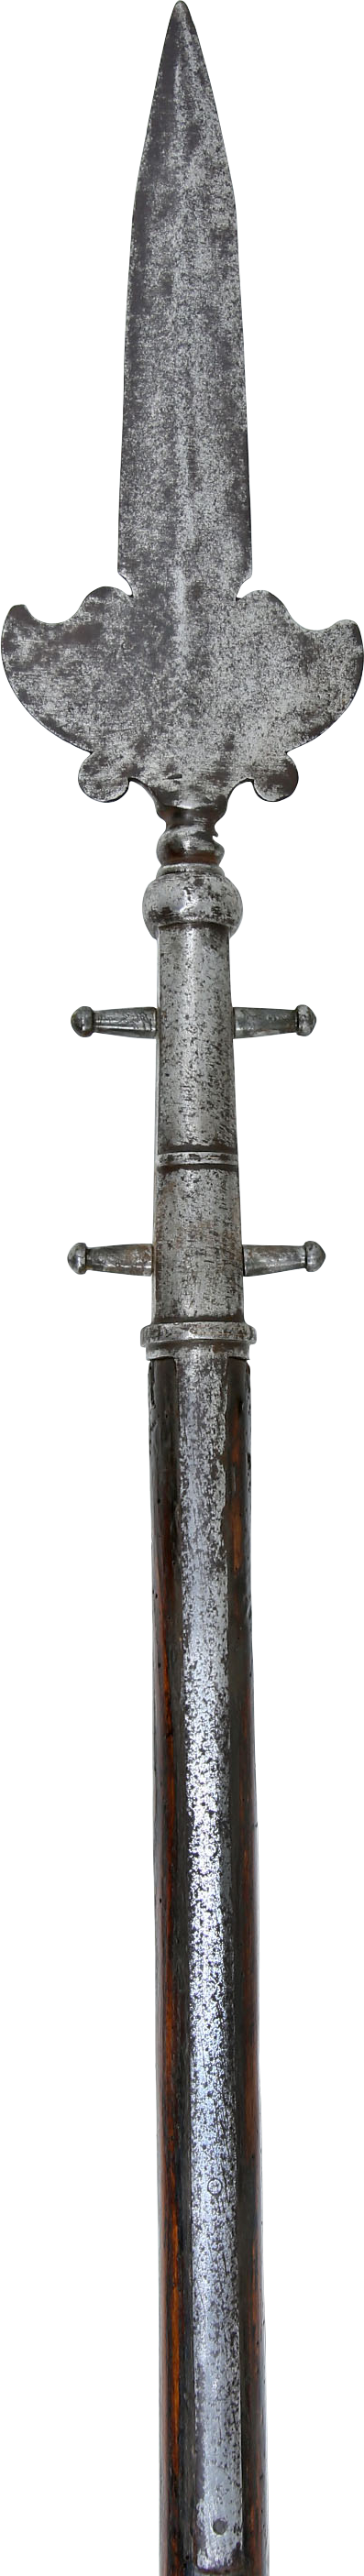 EUROPEAN SPONTOON C.1750-70 - Fagan Arms